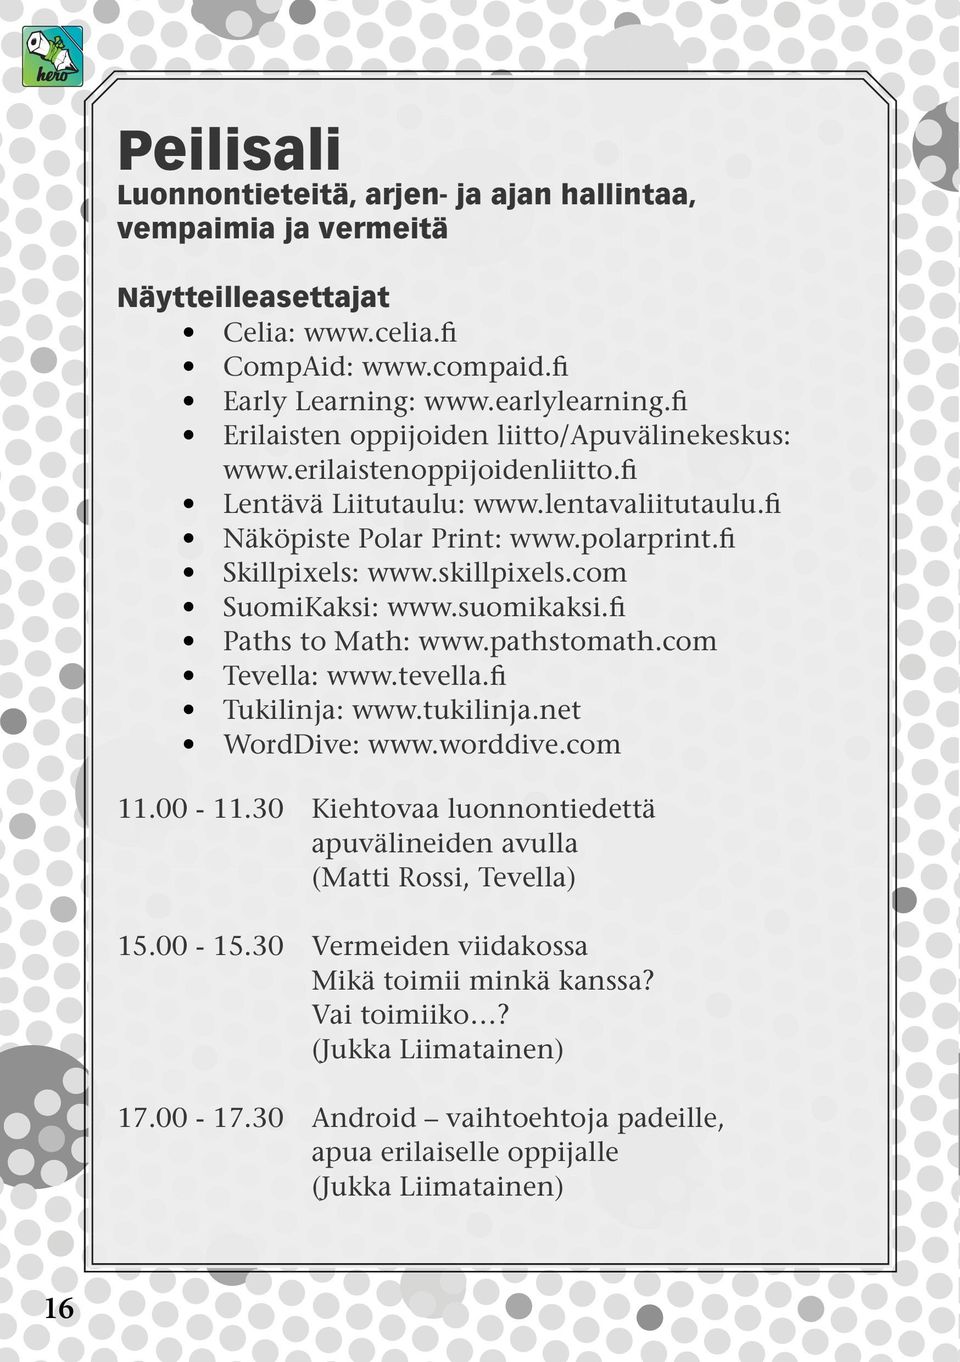 skillpixels.com SuomiKaksi: www.suomikaksi.fi Paths to Math: www.pathstomath.com Tevella: www.tevella.fi Tukilinja: www.tukilinja.net WordDive: www.worddive.com 11.00-11.